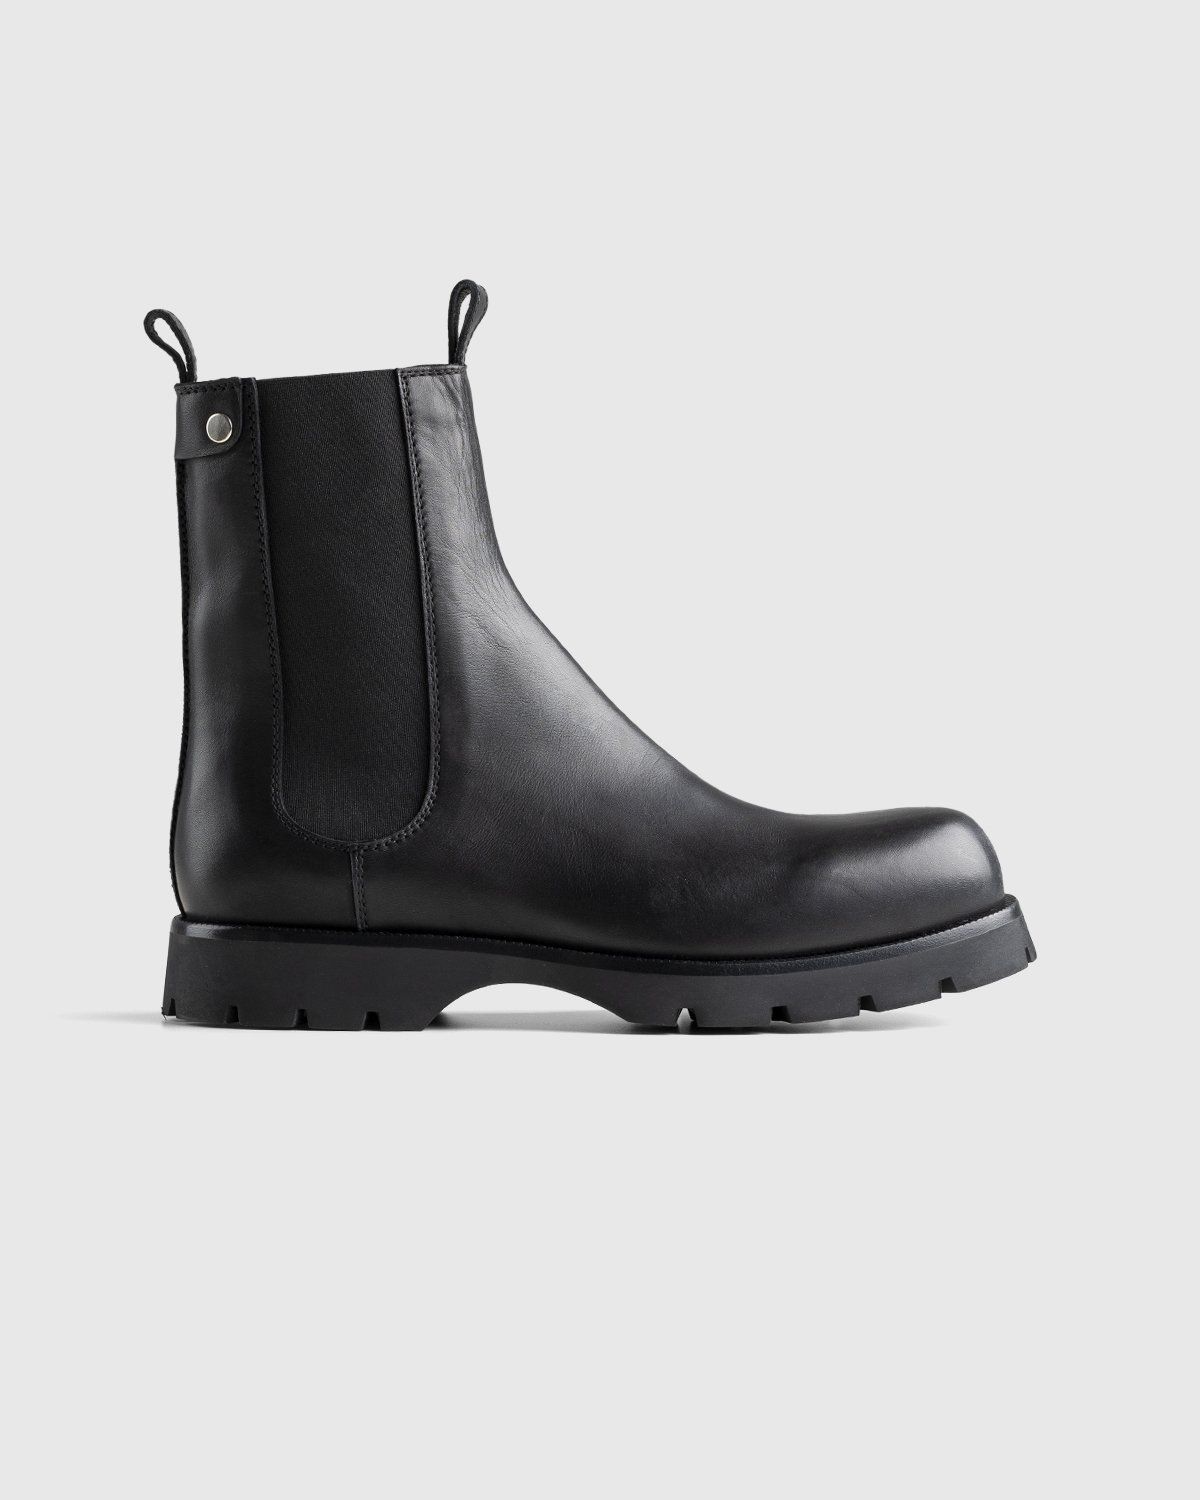 Jil Sander – Chelsea Boots Black - Shoes - Black - Image 1